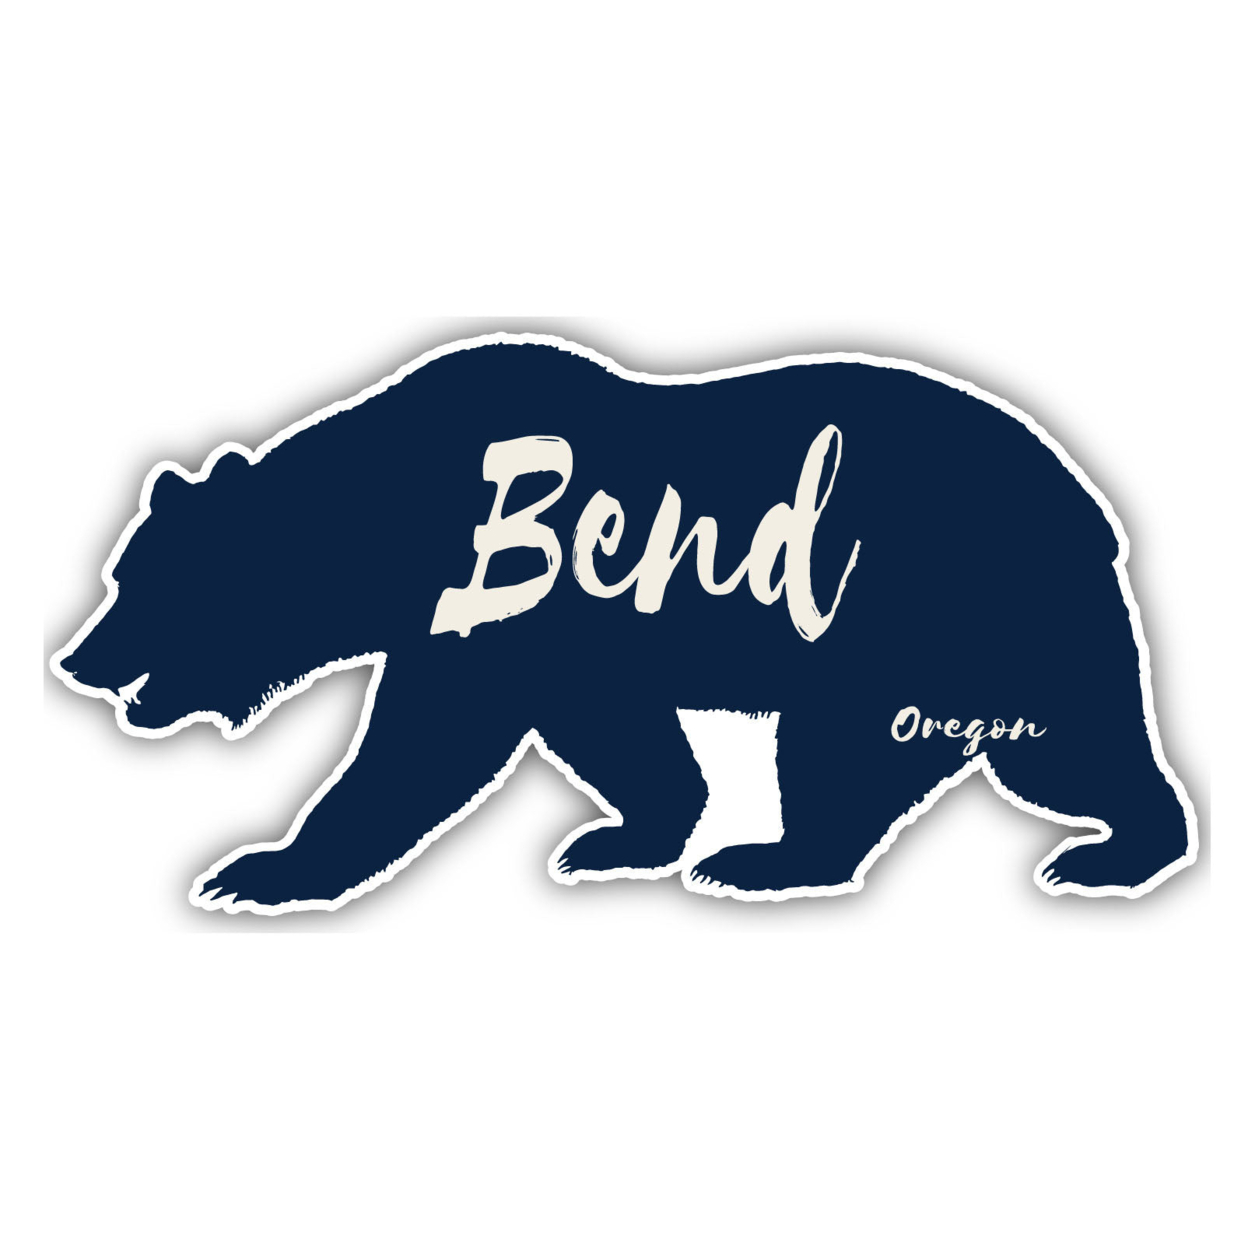 Bend Oregon Souvenir Decorative Stickers (Choose Theme And Size) - 4-Pack, 6-Inch, Tent